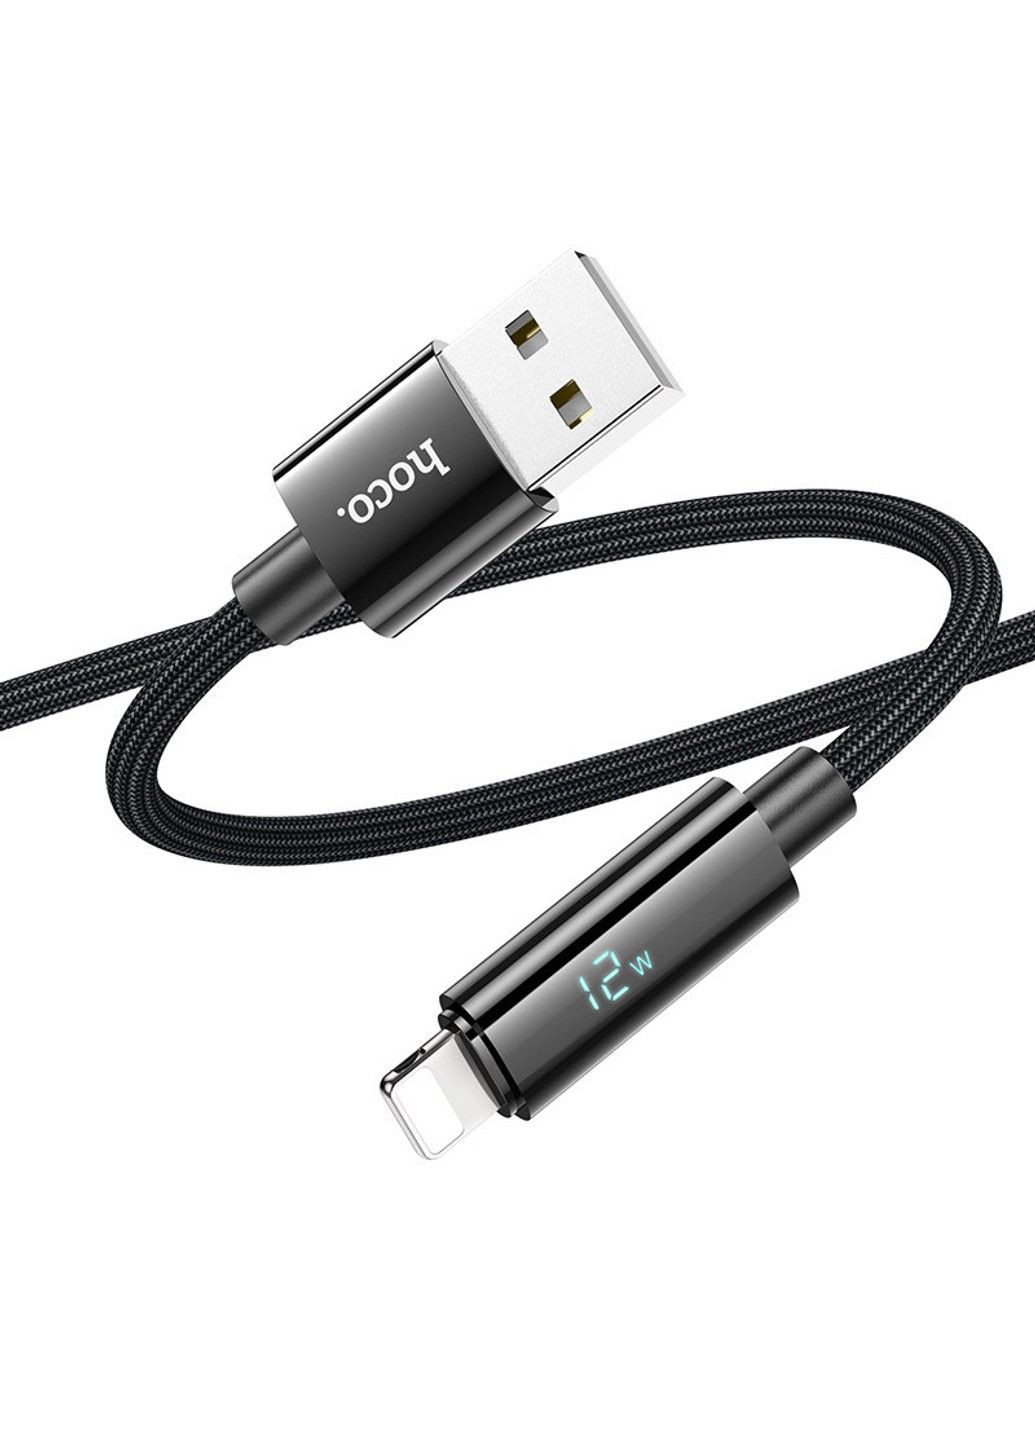 Дата кабель U125 Benefit 2.4A USB to Lightning (1.2m) Hoco (293512551)